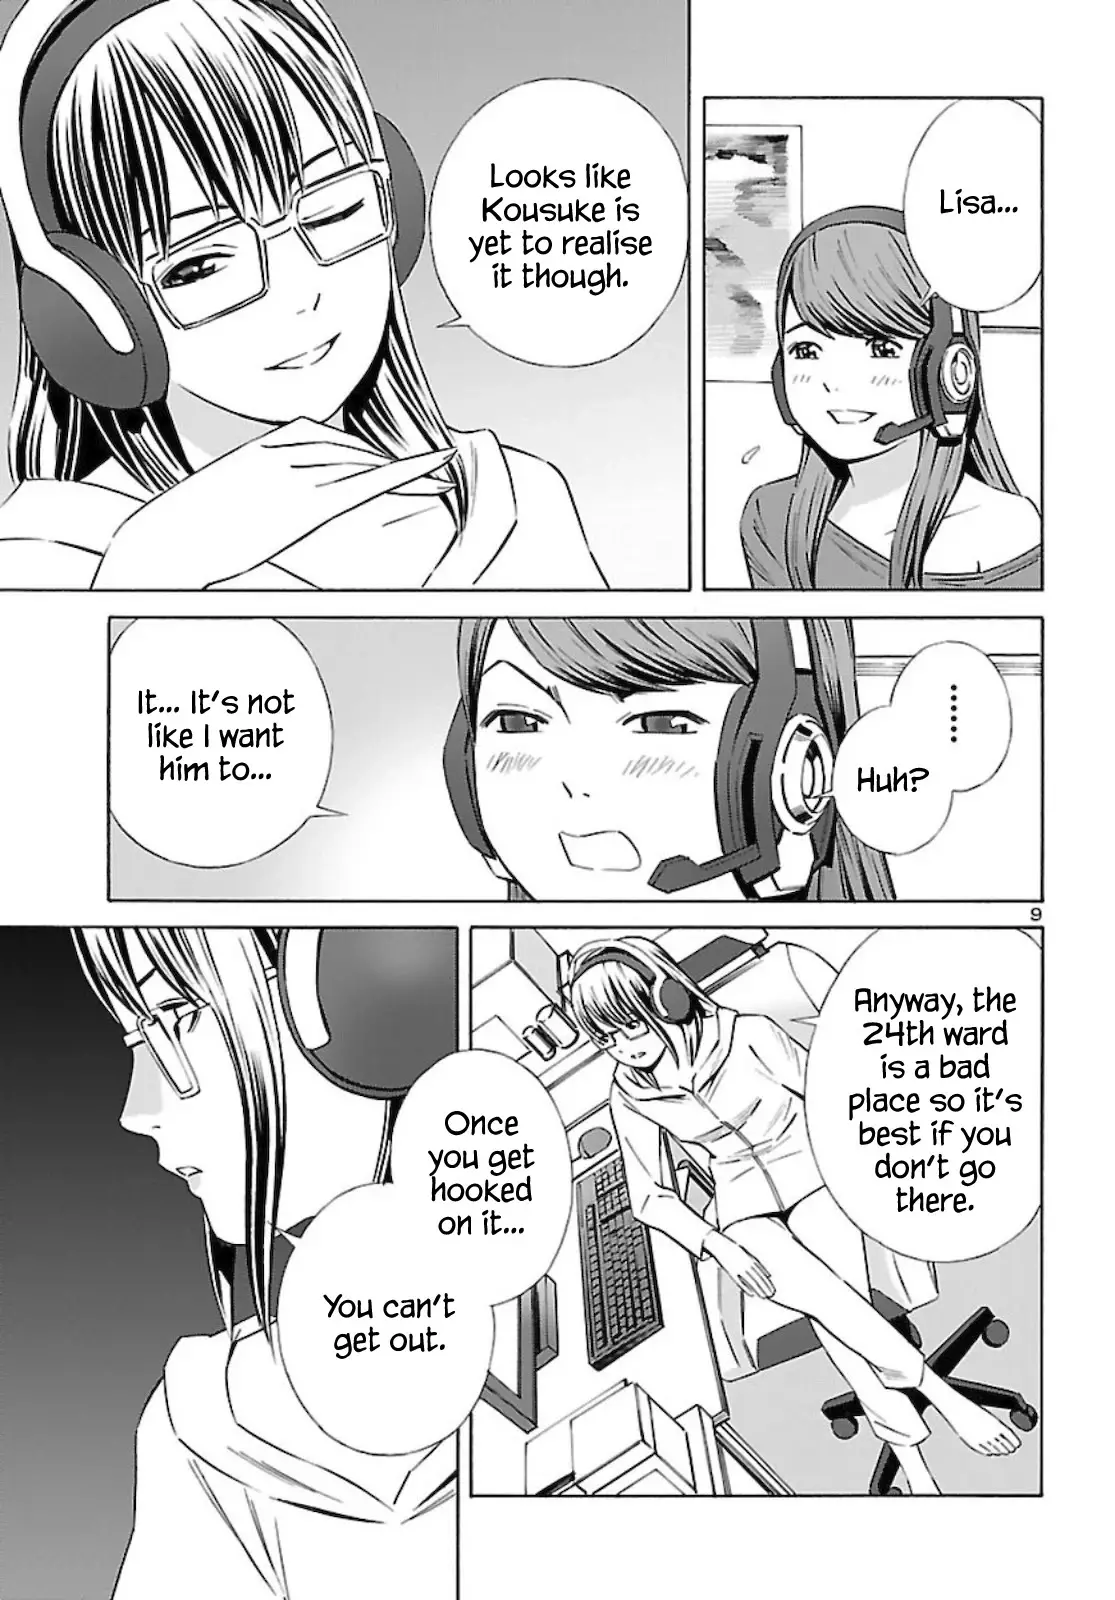 24-Ku No Hanako-San - 13 page 9-1e51bad6